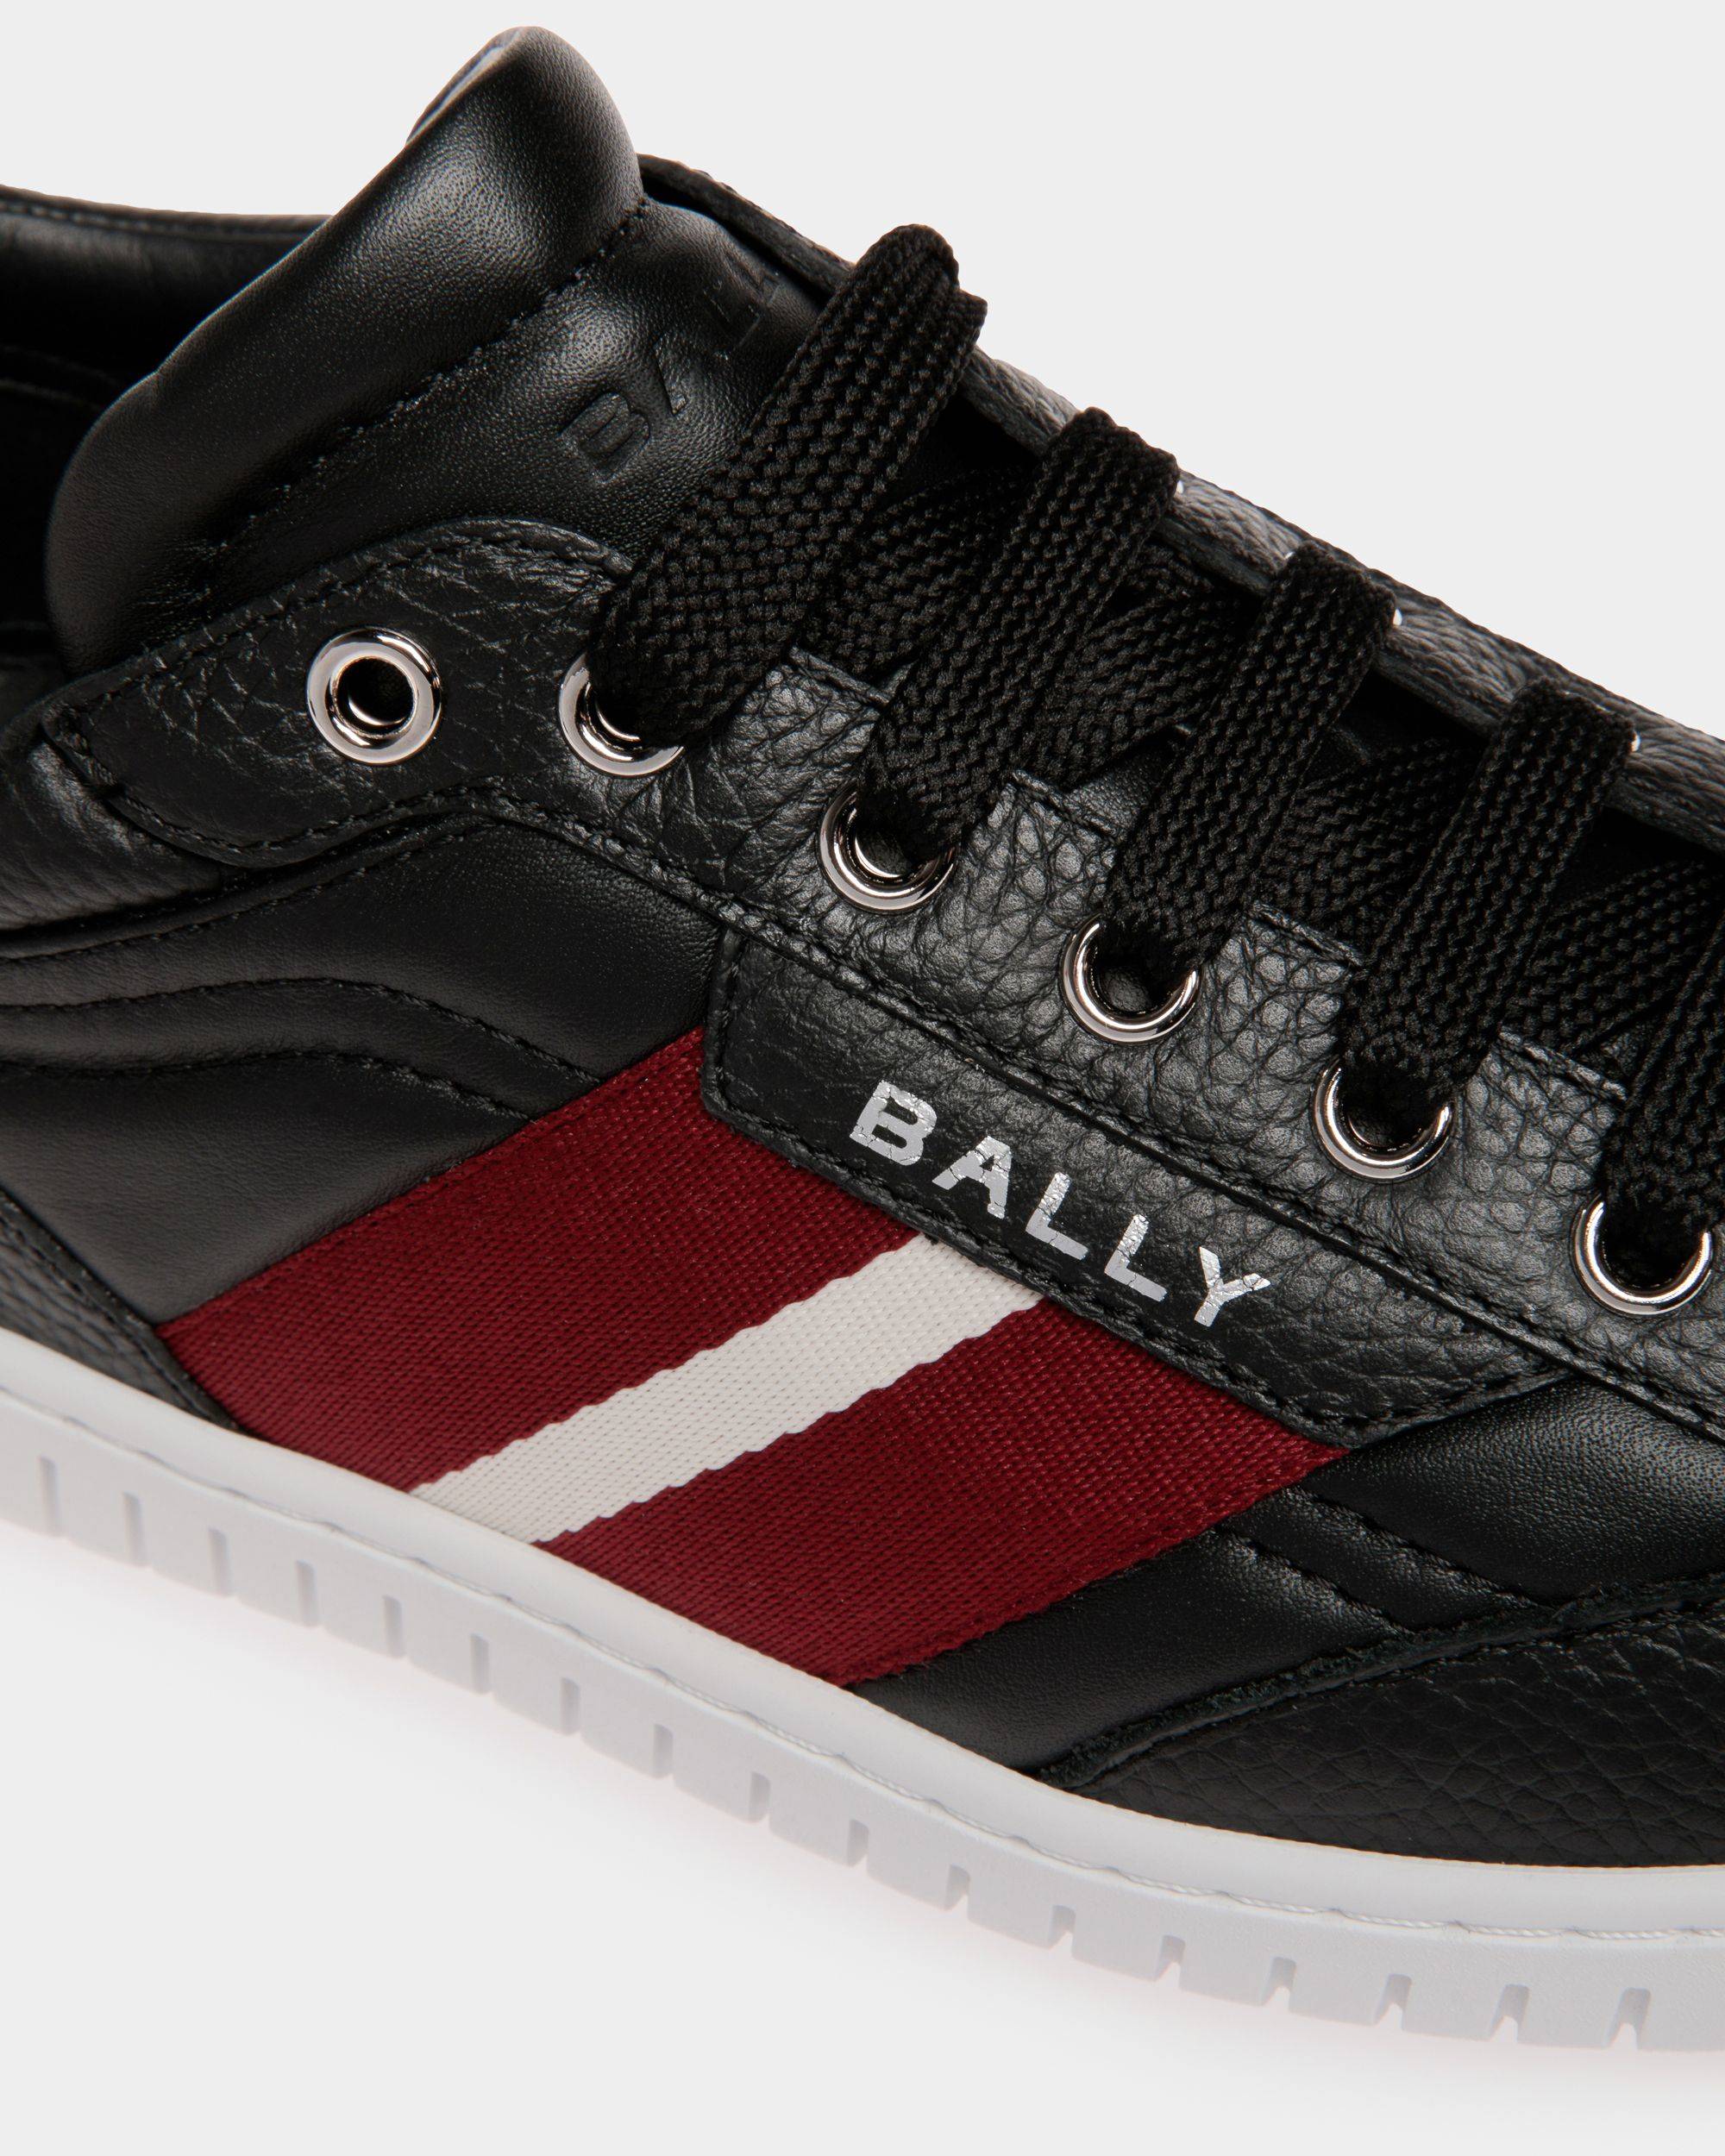 Player | Damen-Sneaker aus schwarzem Leder | Bally | Still Life Detail